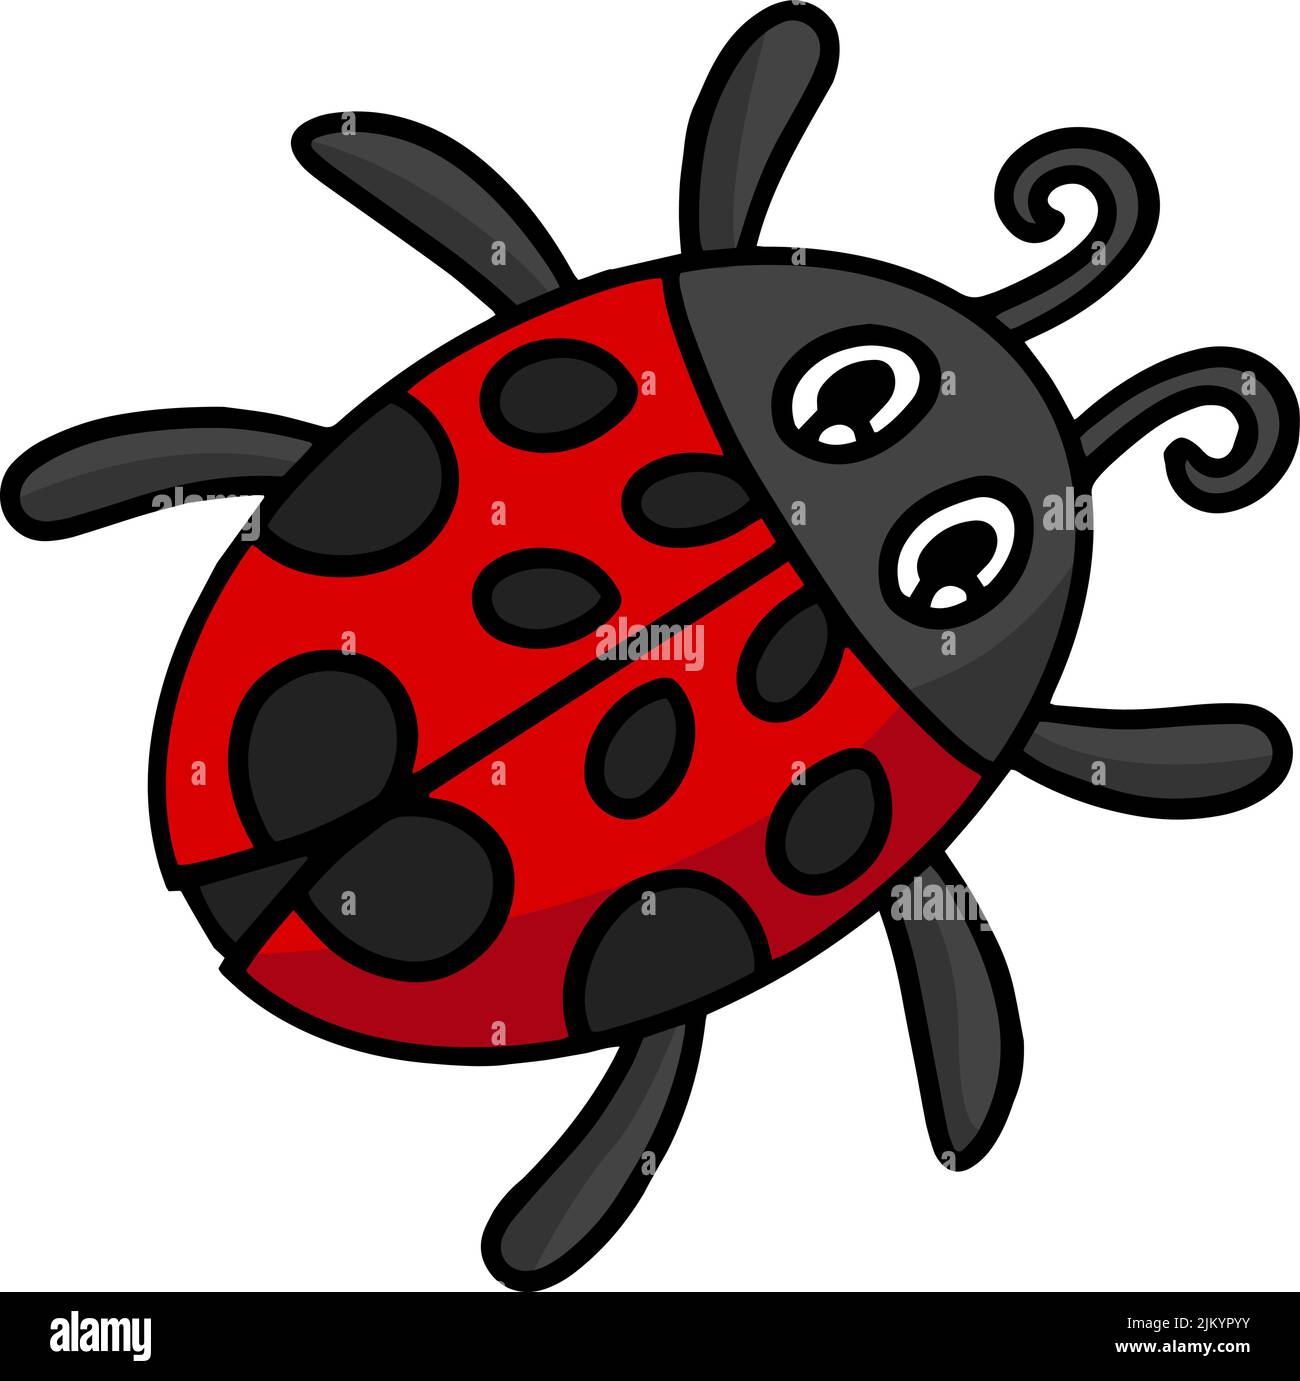 Free Vector  Cute ladybug animal cartoon sticker